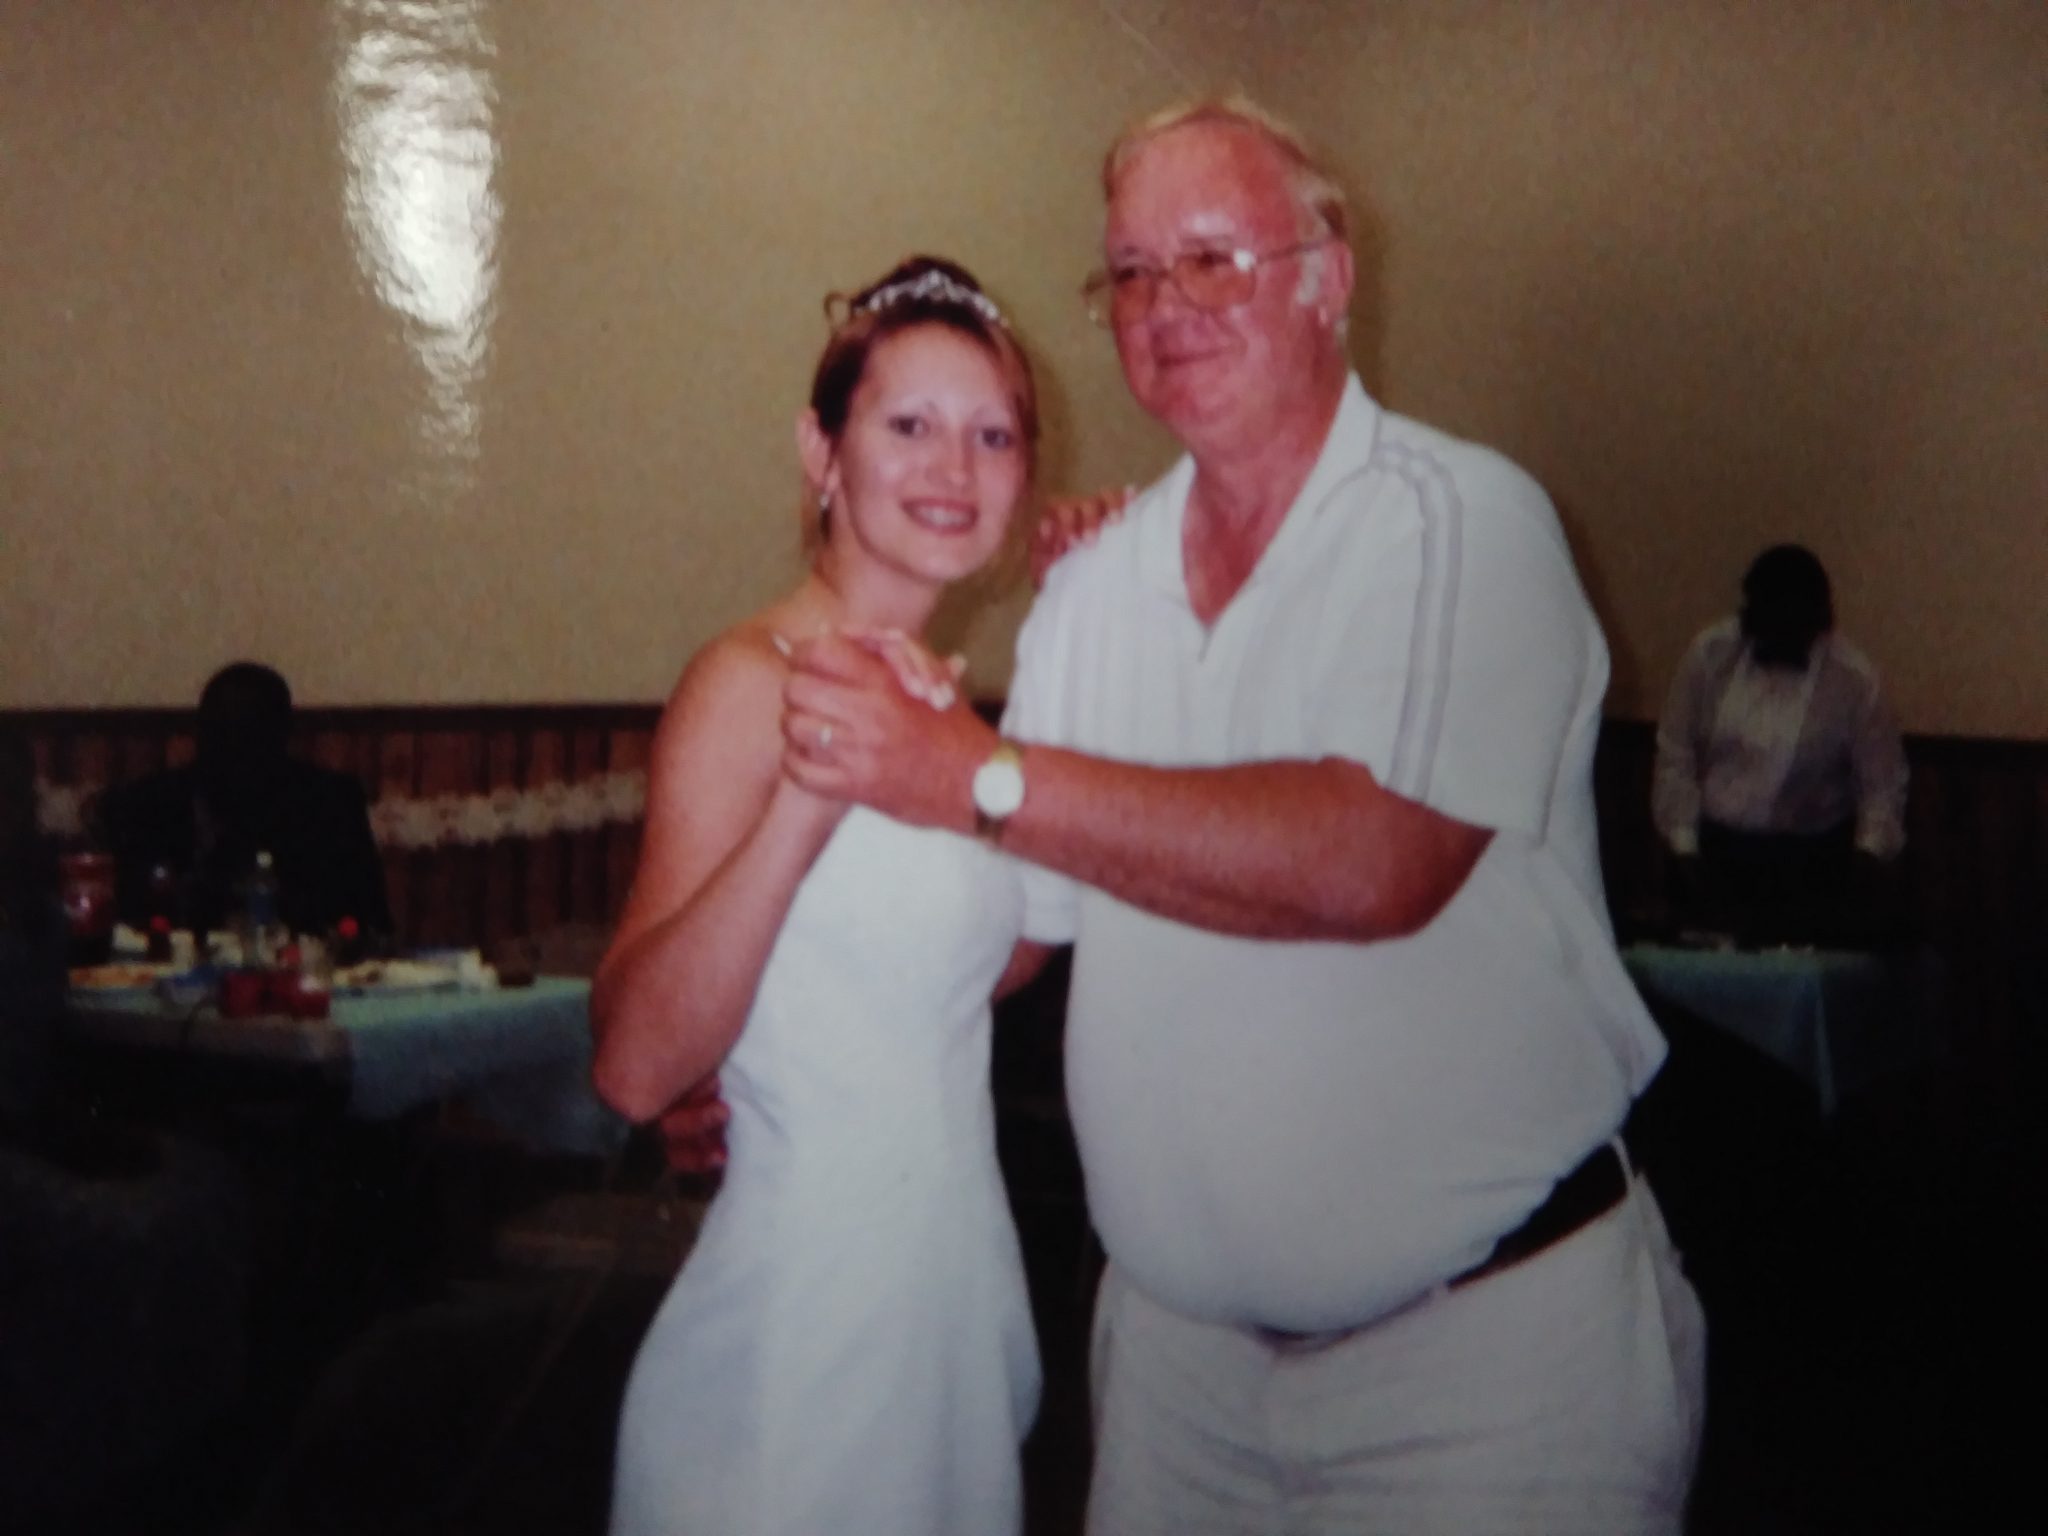 Me and grandpa dancing at my wedding in 2004